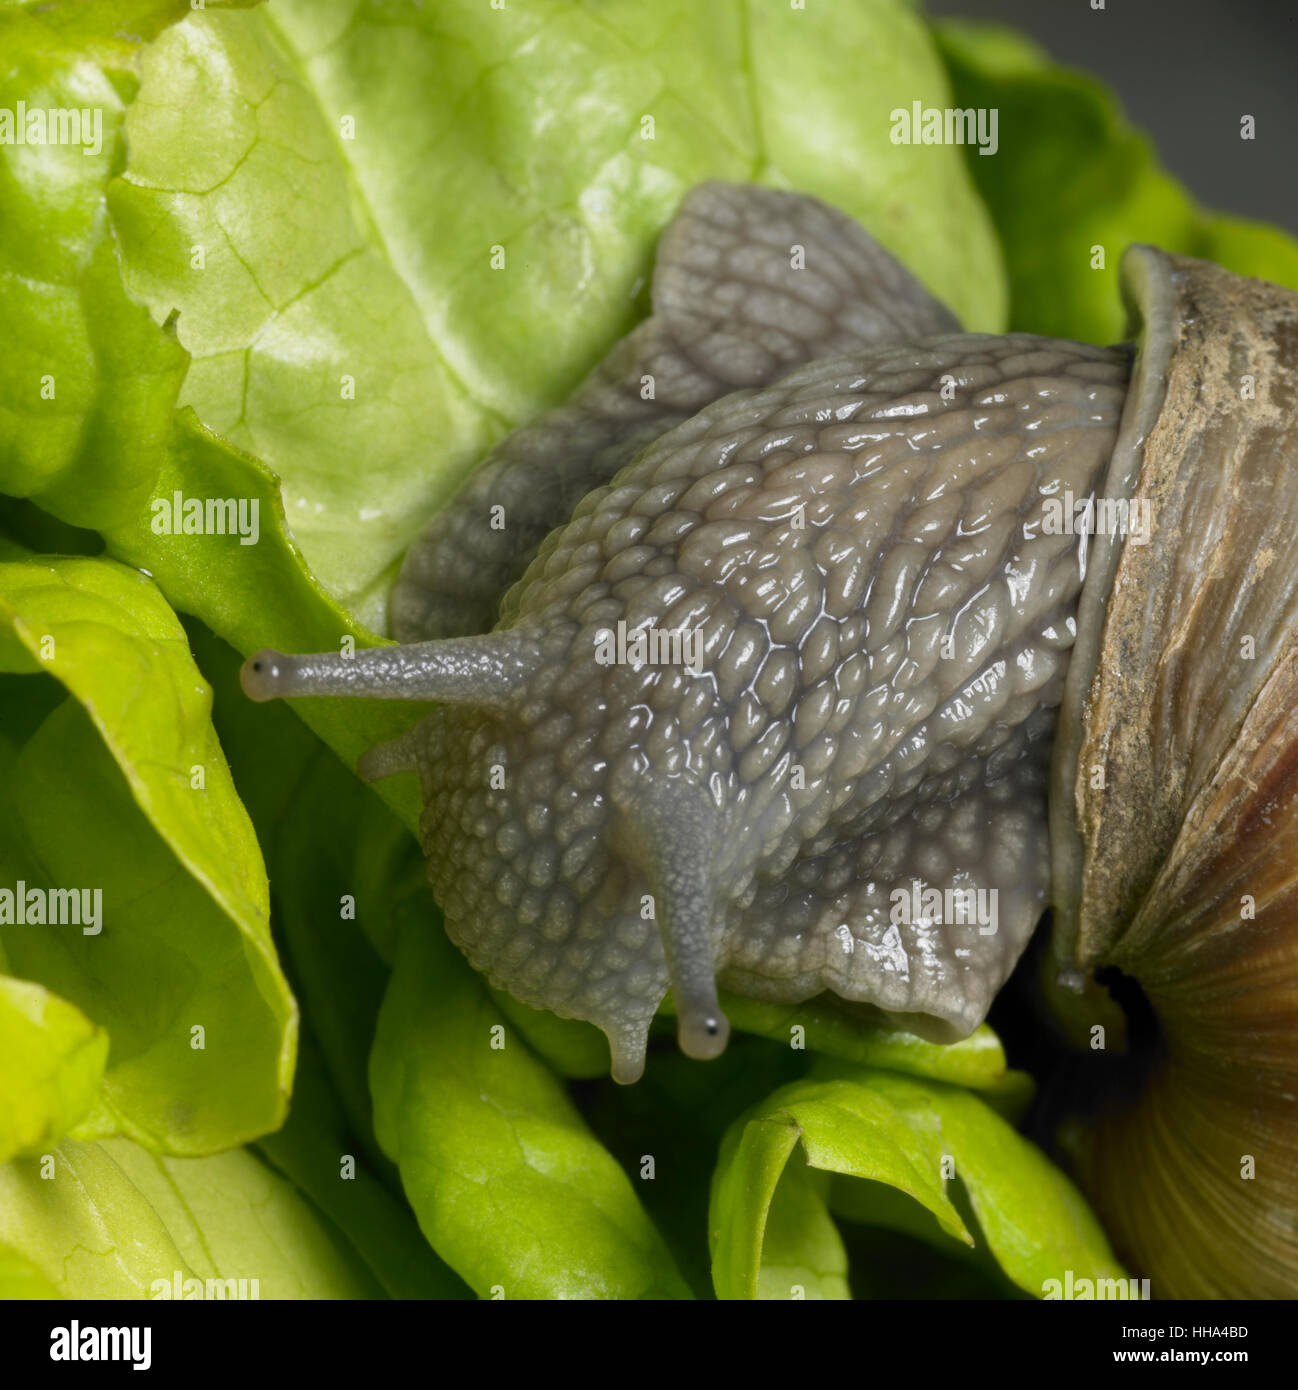 snail, edible snail, terrestrial, salad, motion, postponement, moving, Stock Photo